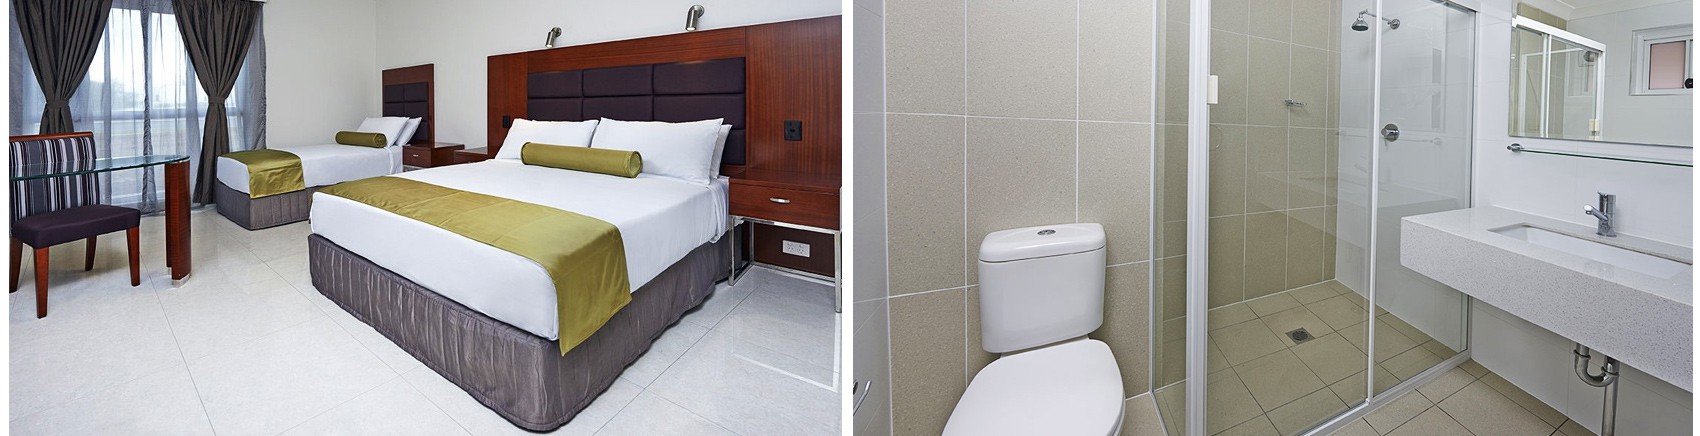 Standard Plus Room - Beds & Bathroom